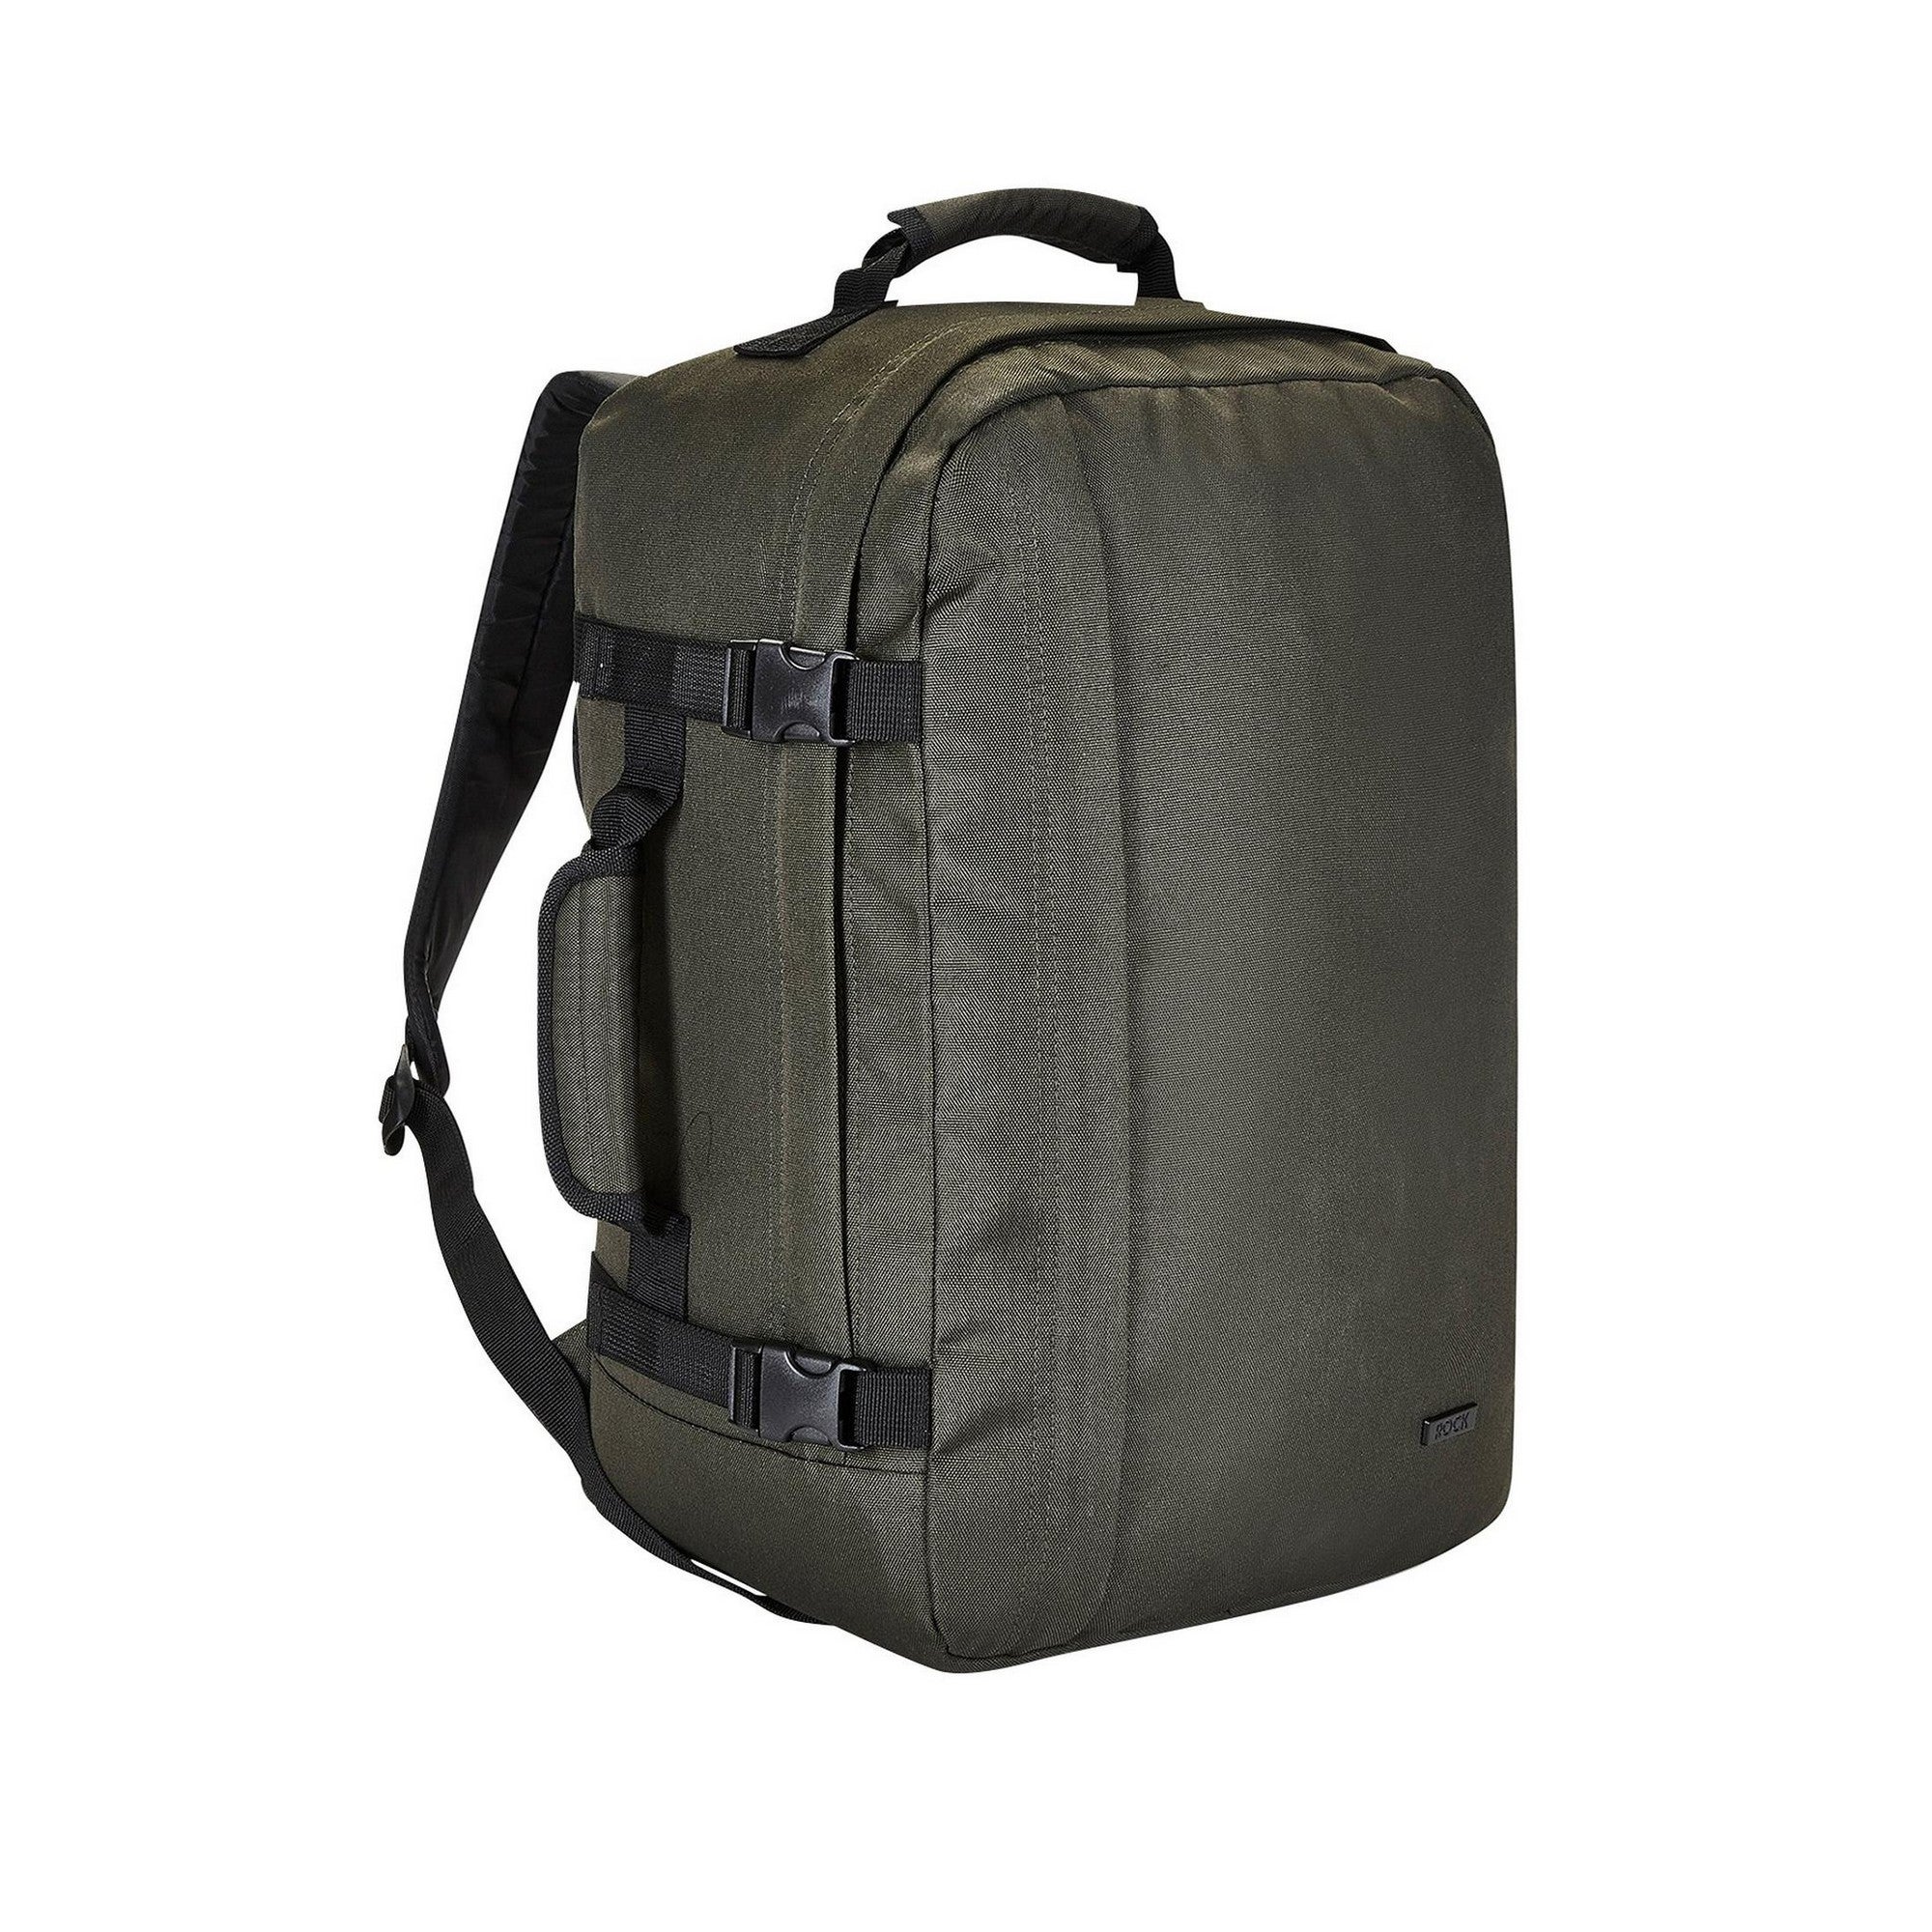 Rock Luggage Cabin Backpack | Dunelm